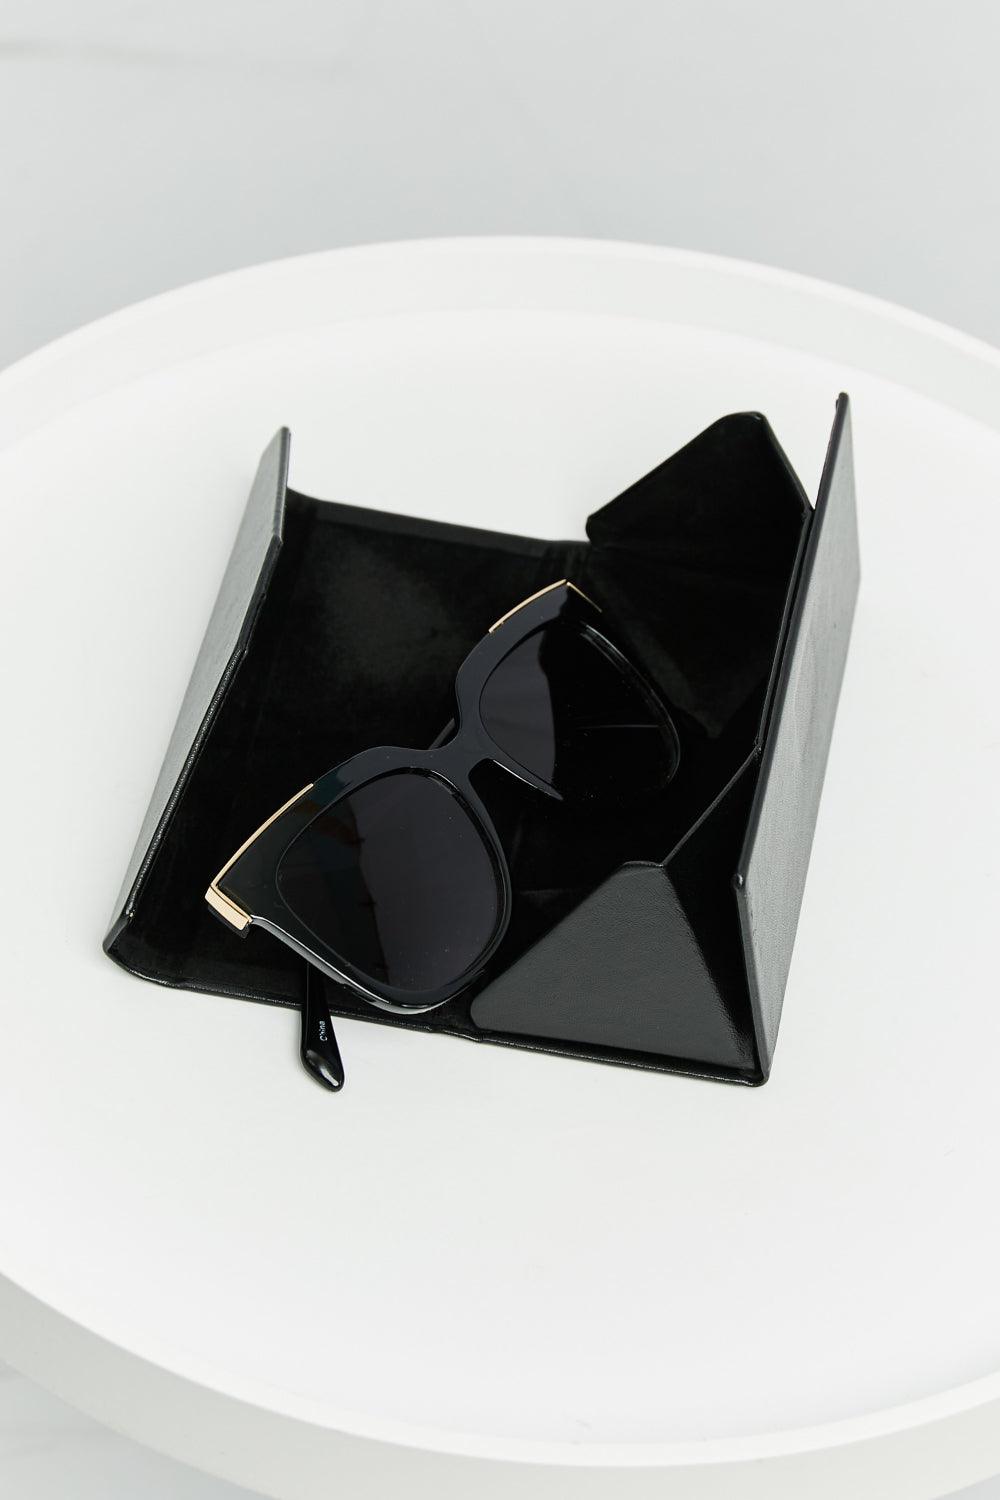 Full Rim Polycarbonate Frame Sunglasses - Olive Ave